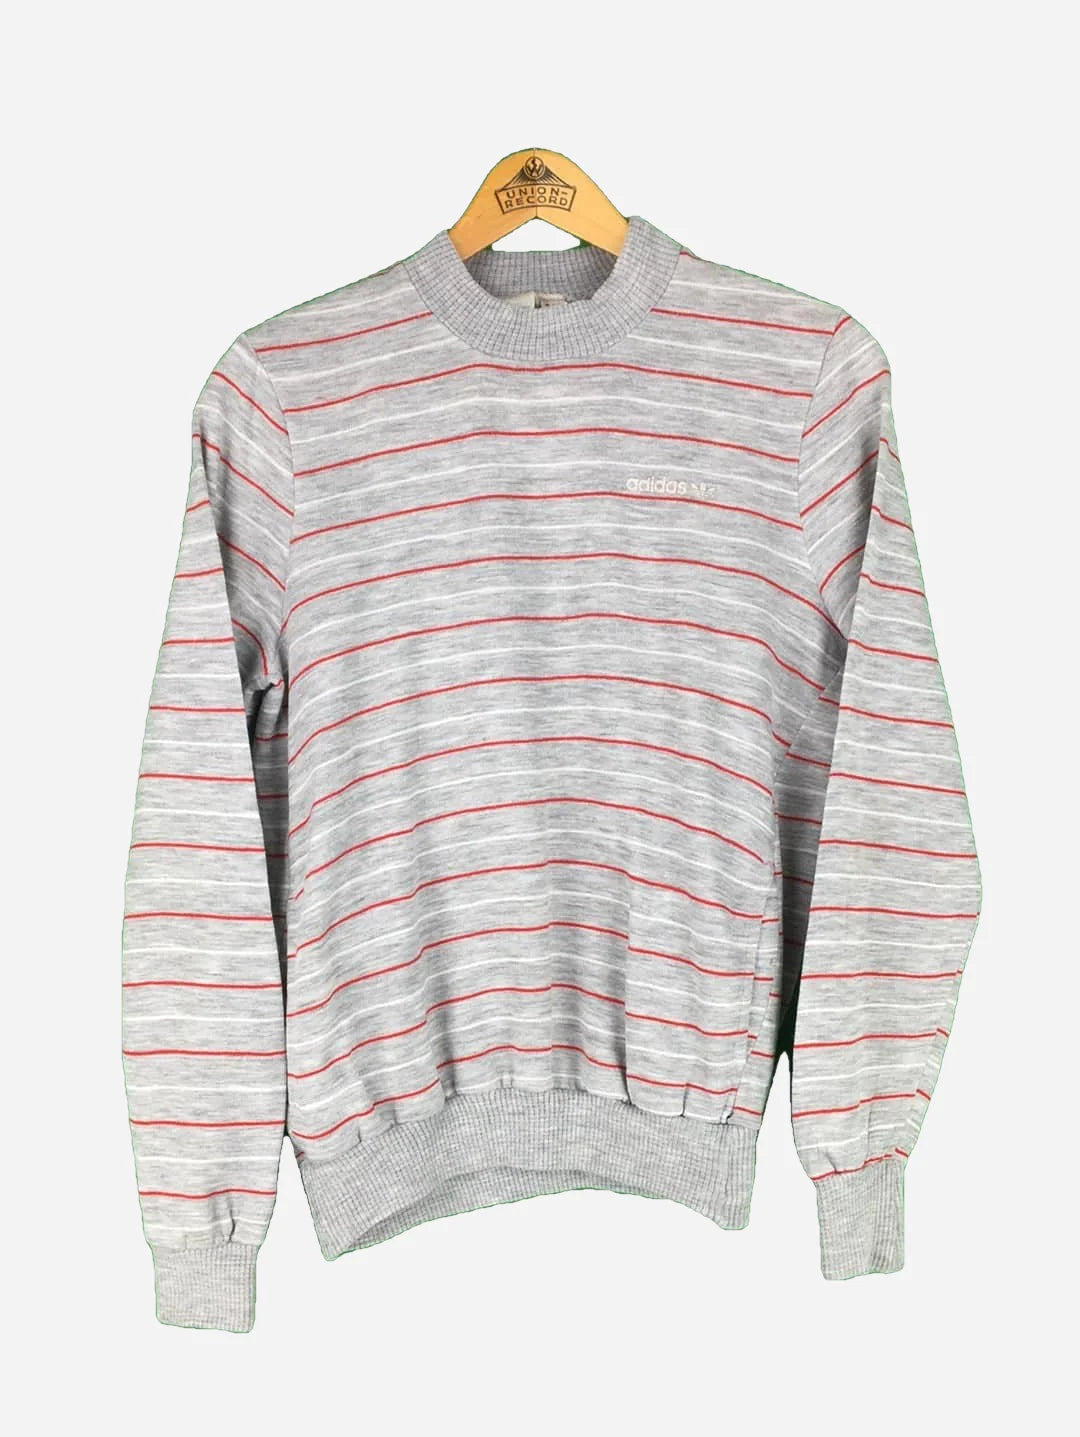 Adidas 80s Sweater (S)